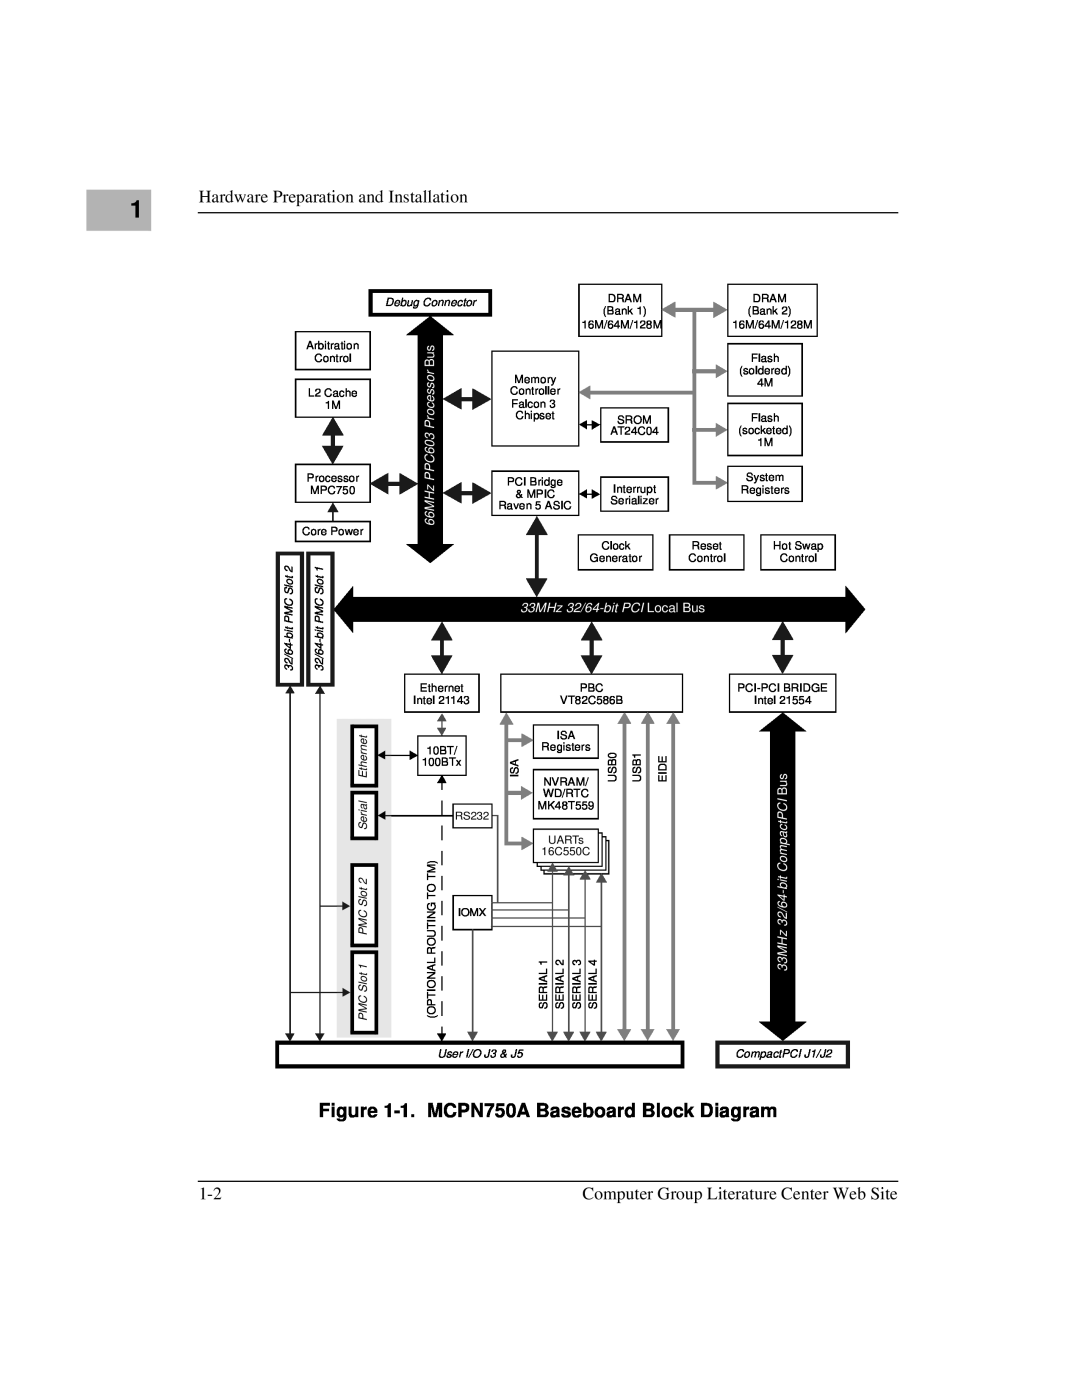 Motorola 1. MCPN750A Baseboard Block Diagram, 33MHz 32/64-bit PCI Local Bus, 33MHz 32/64-bit CompactPCI Bus, Ethernet 